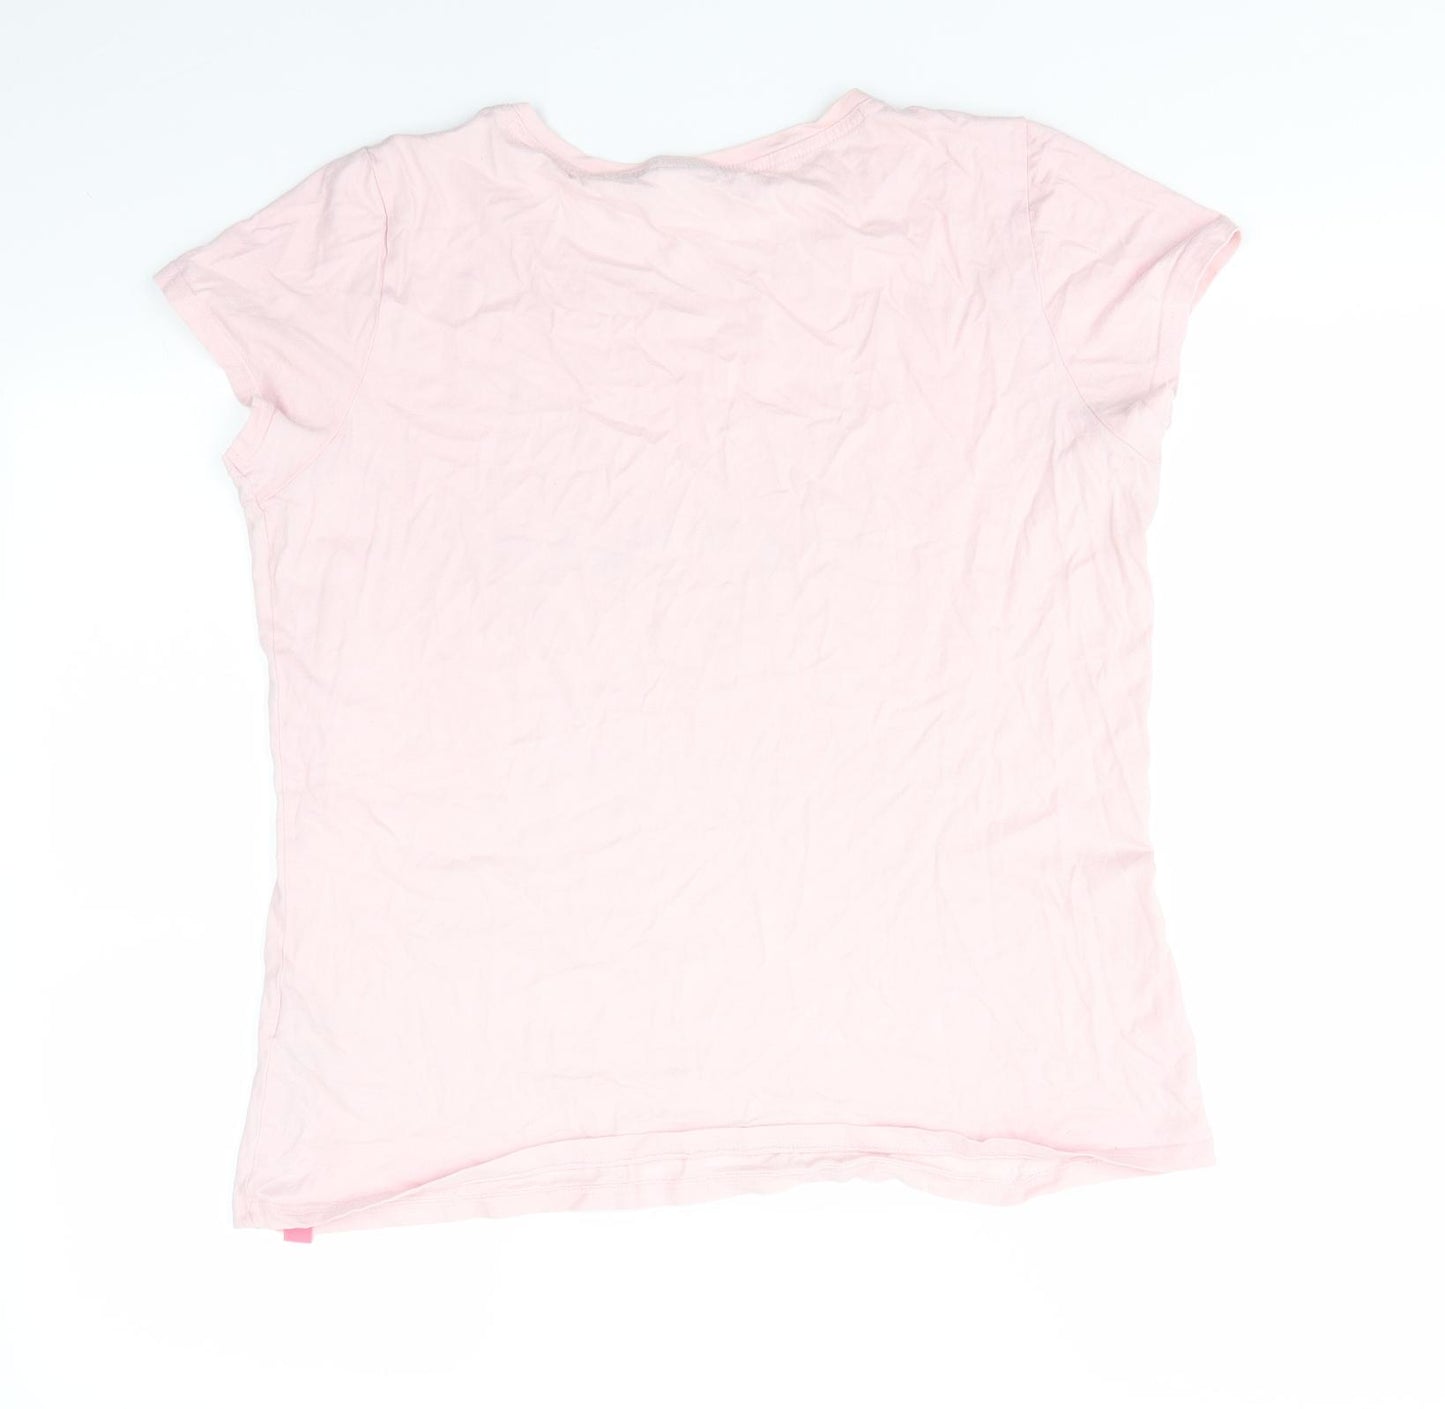 Disney Womens Pink Animal Print Cotton Top Pyjama Top Size 12   - Pale Pink Mickey Mouse